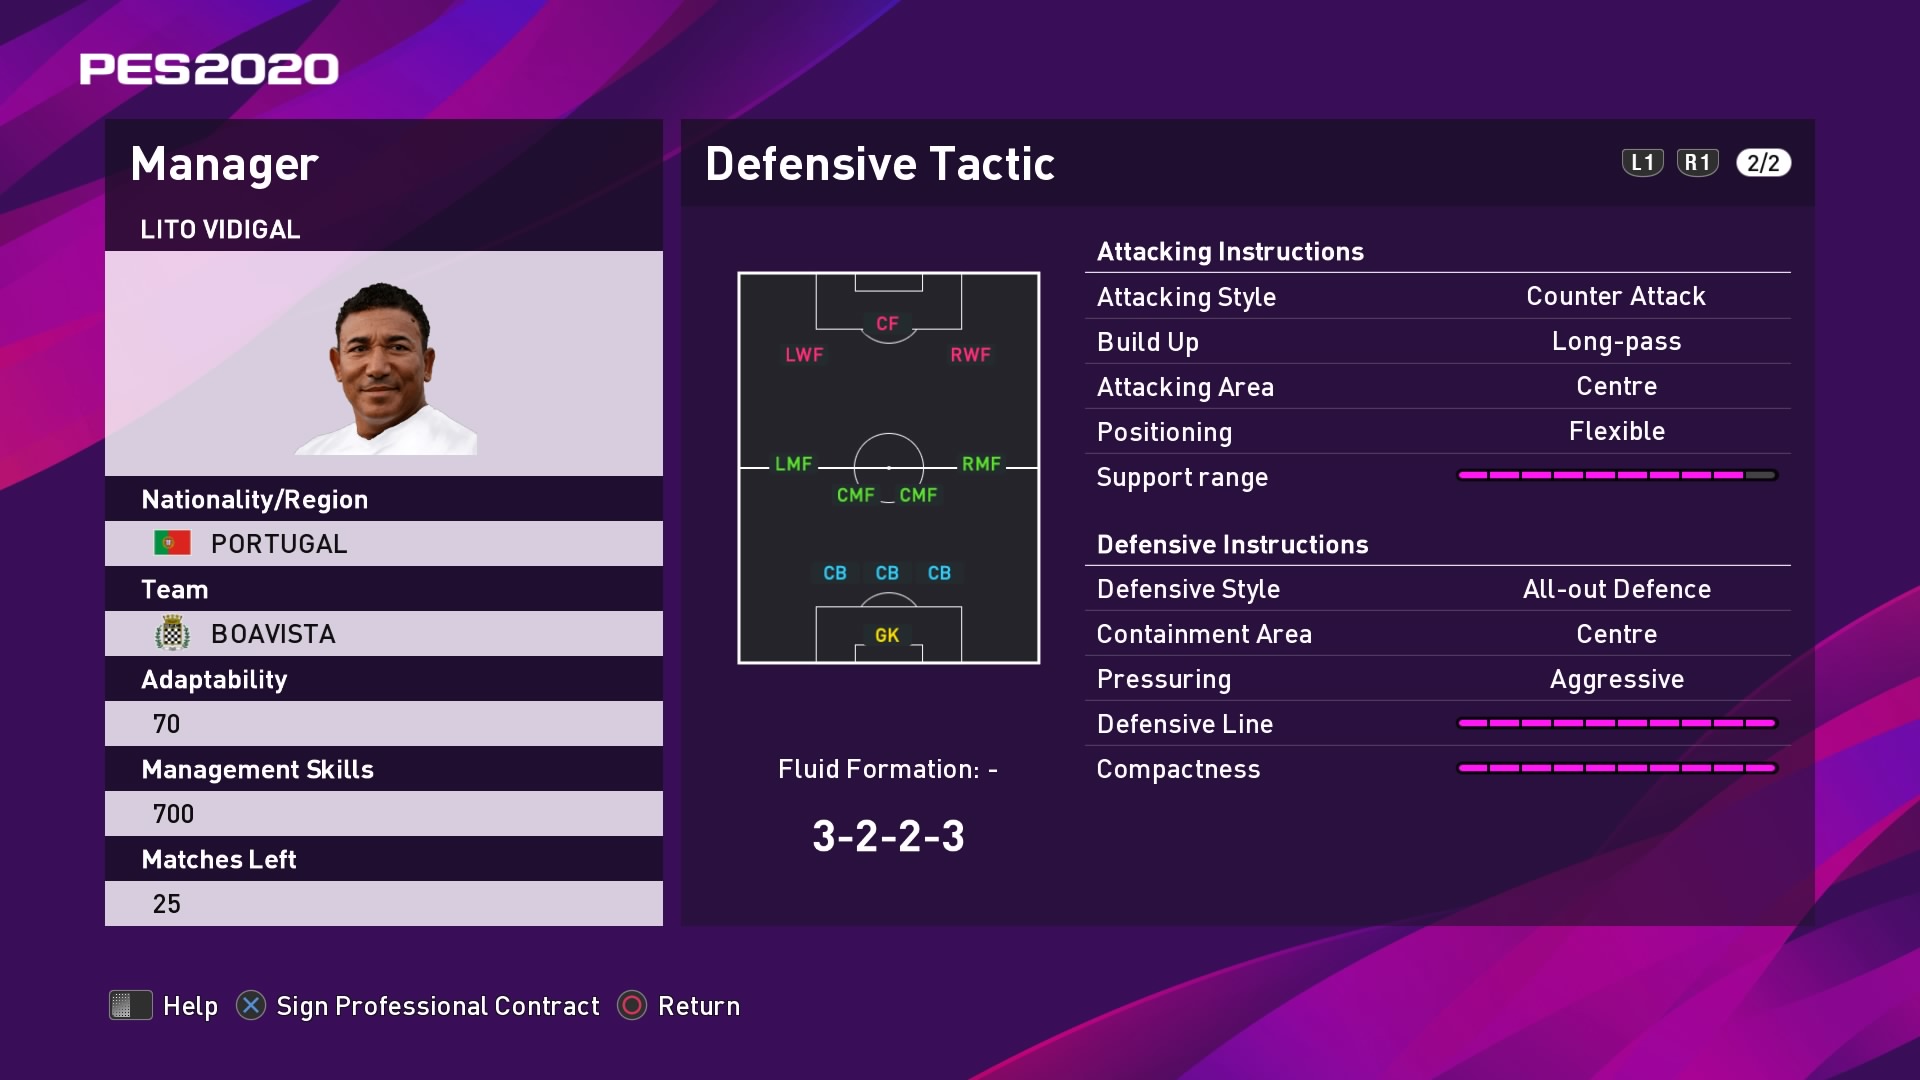 Lito Vidigal Defensive Tactic in PES 2020 myClub